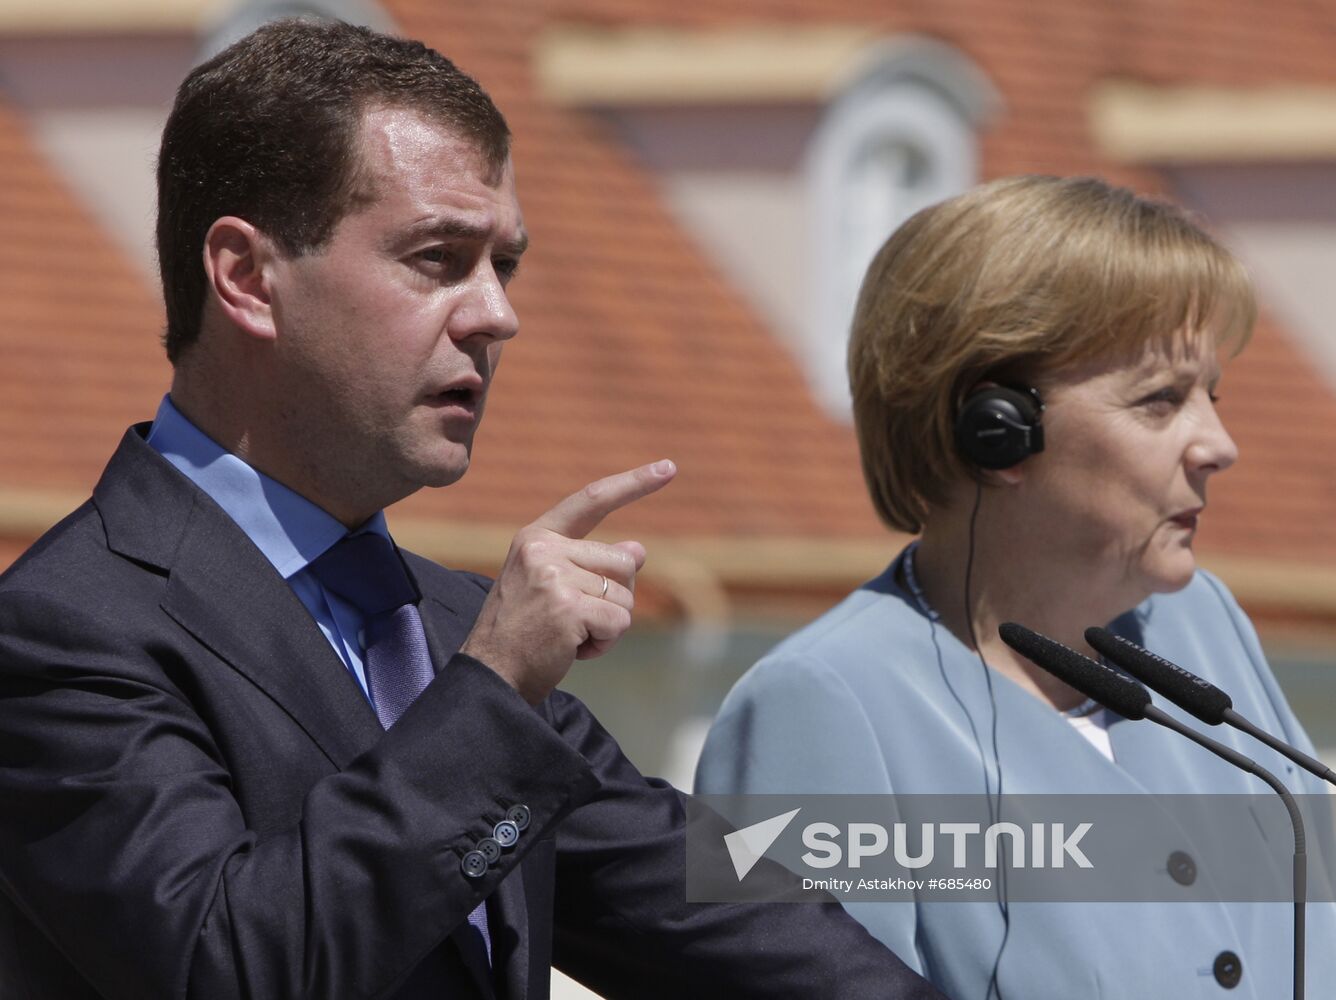 Dmitry Medvedev visits Germany. Day two